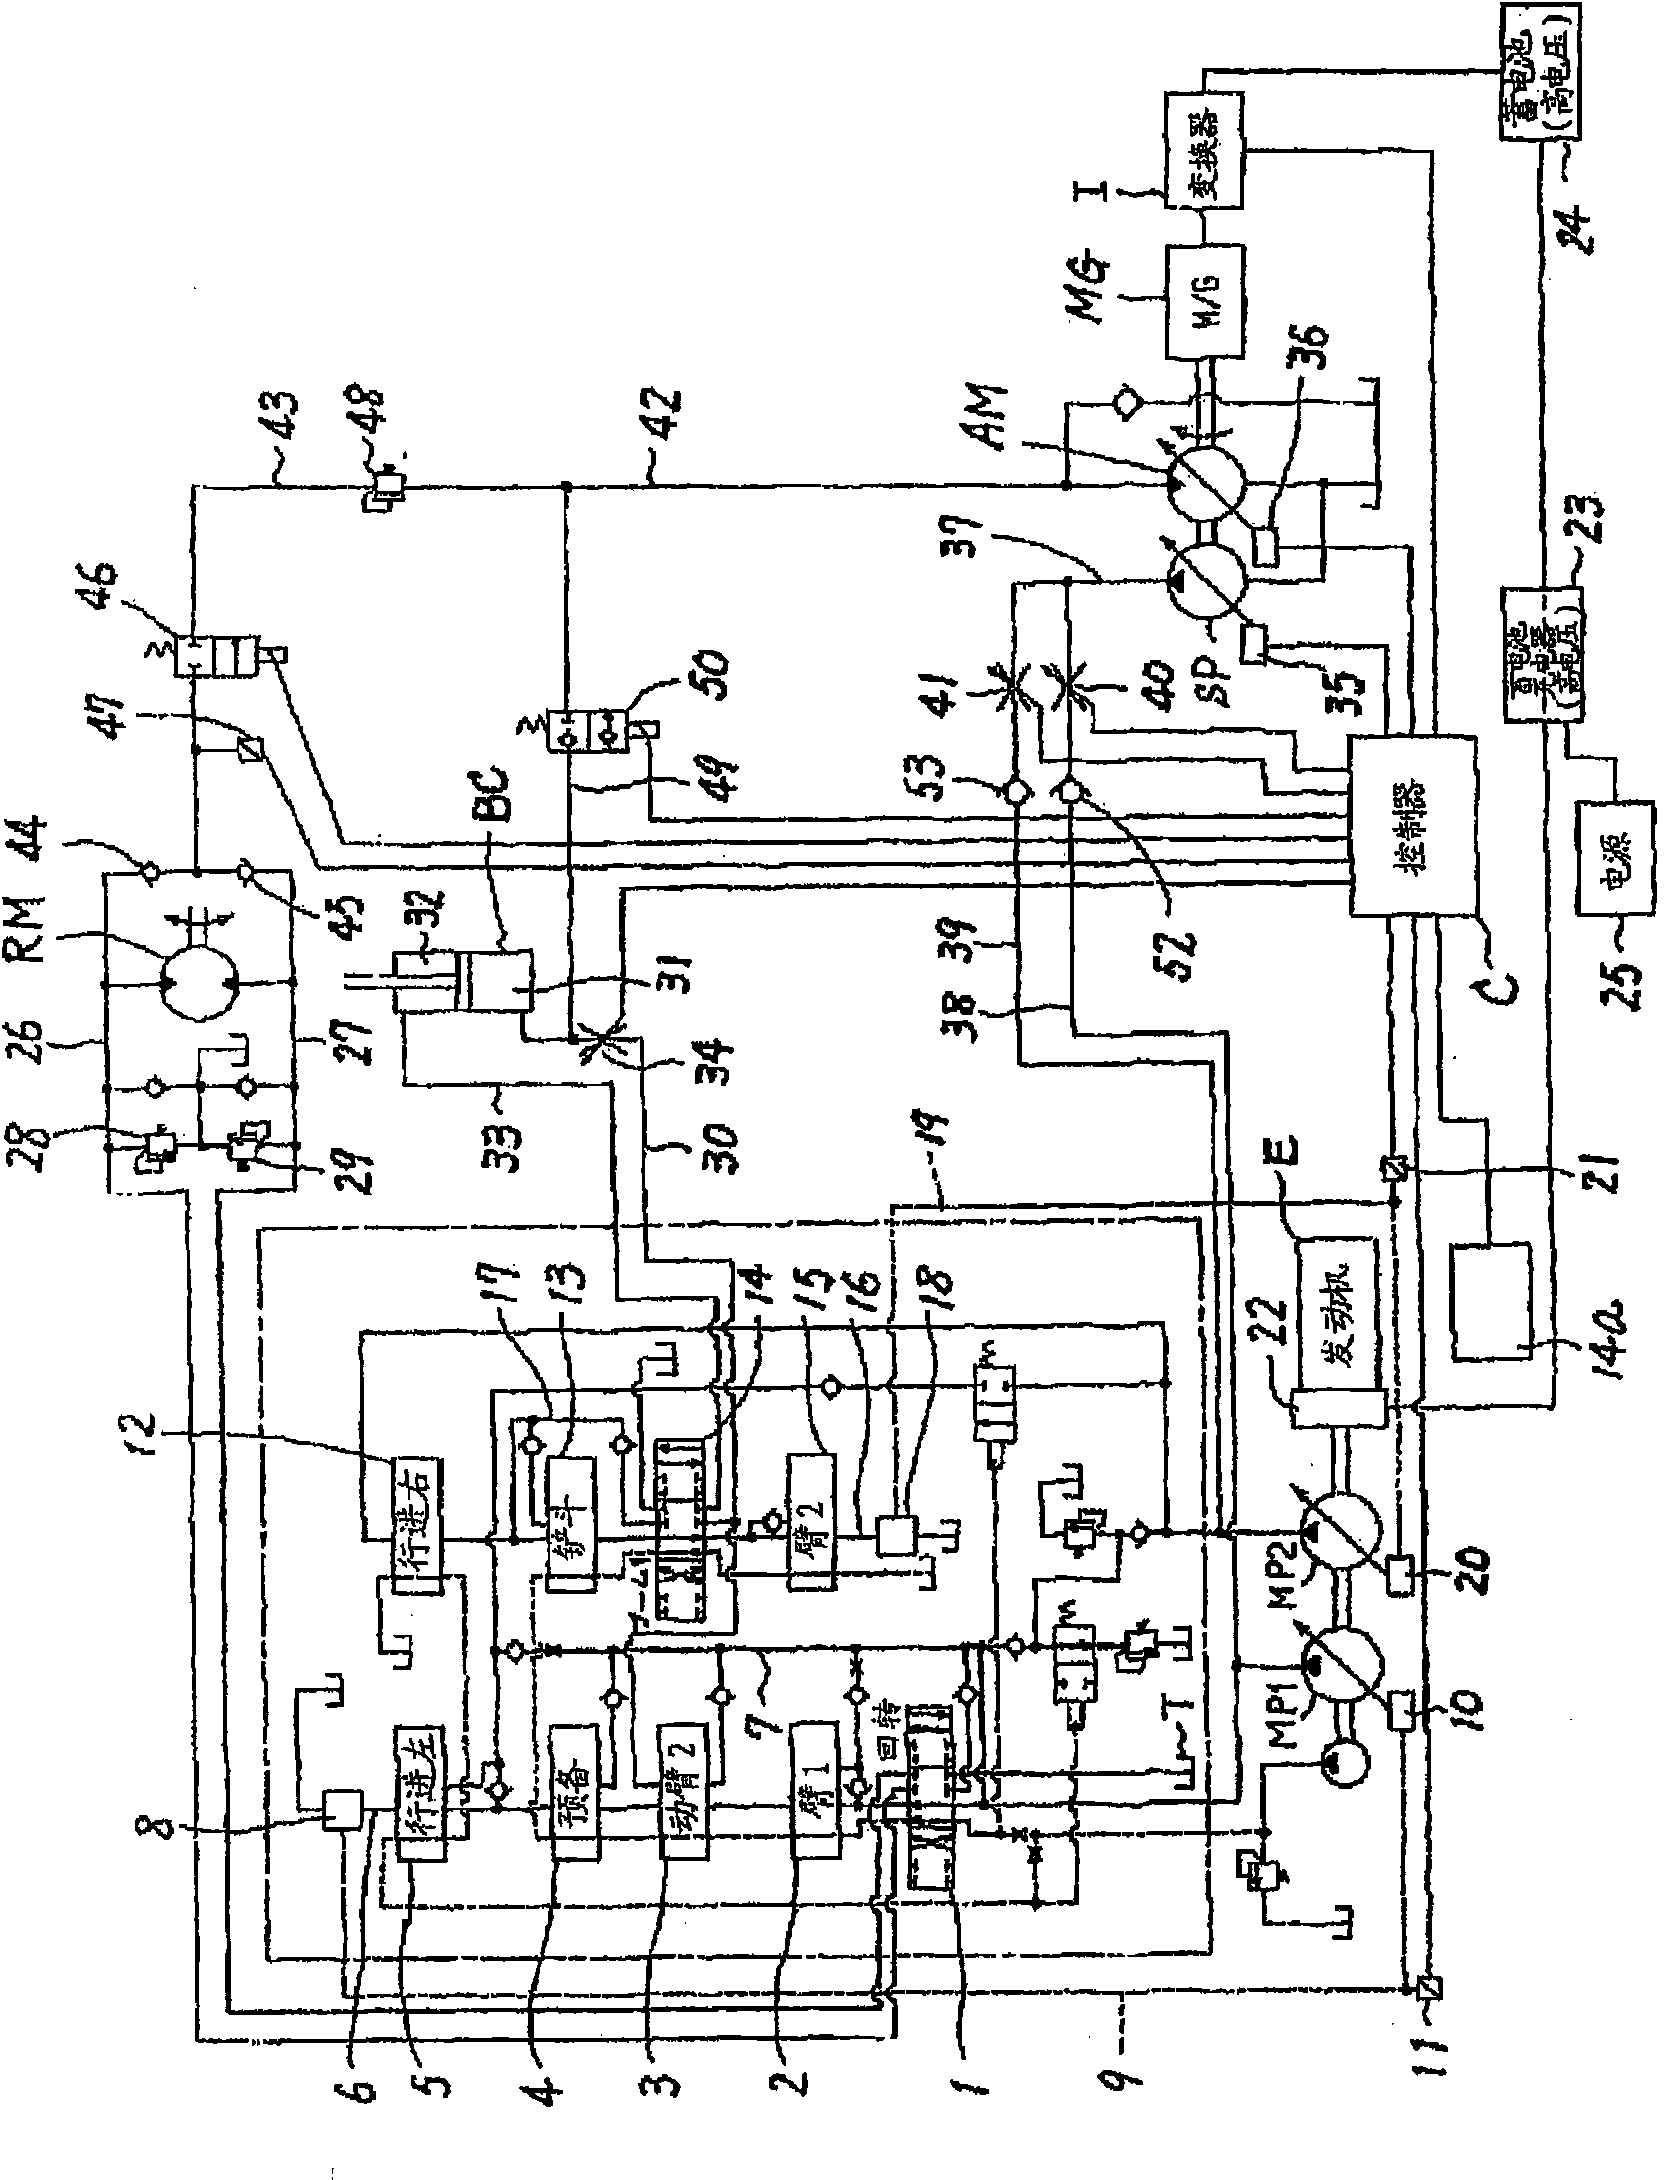 Controller of hybrid construction machine